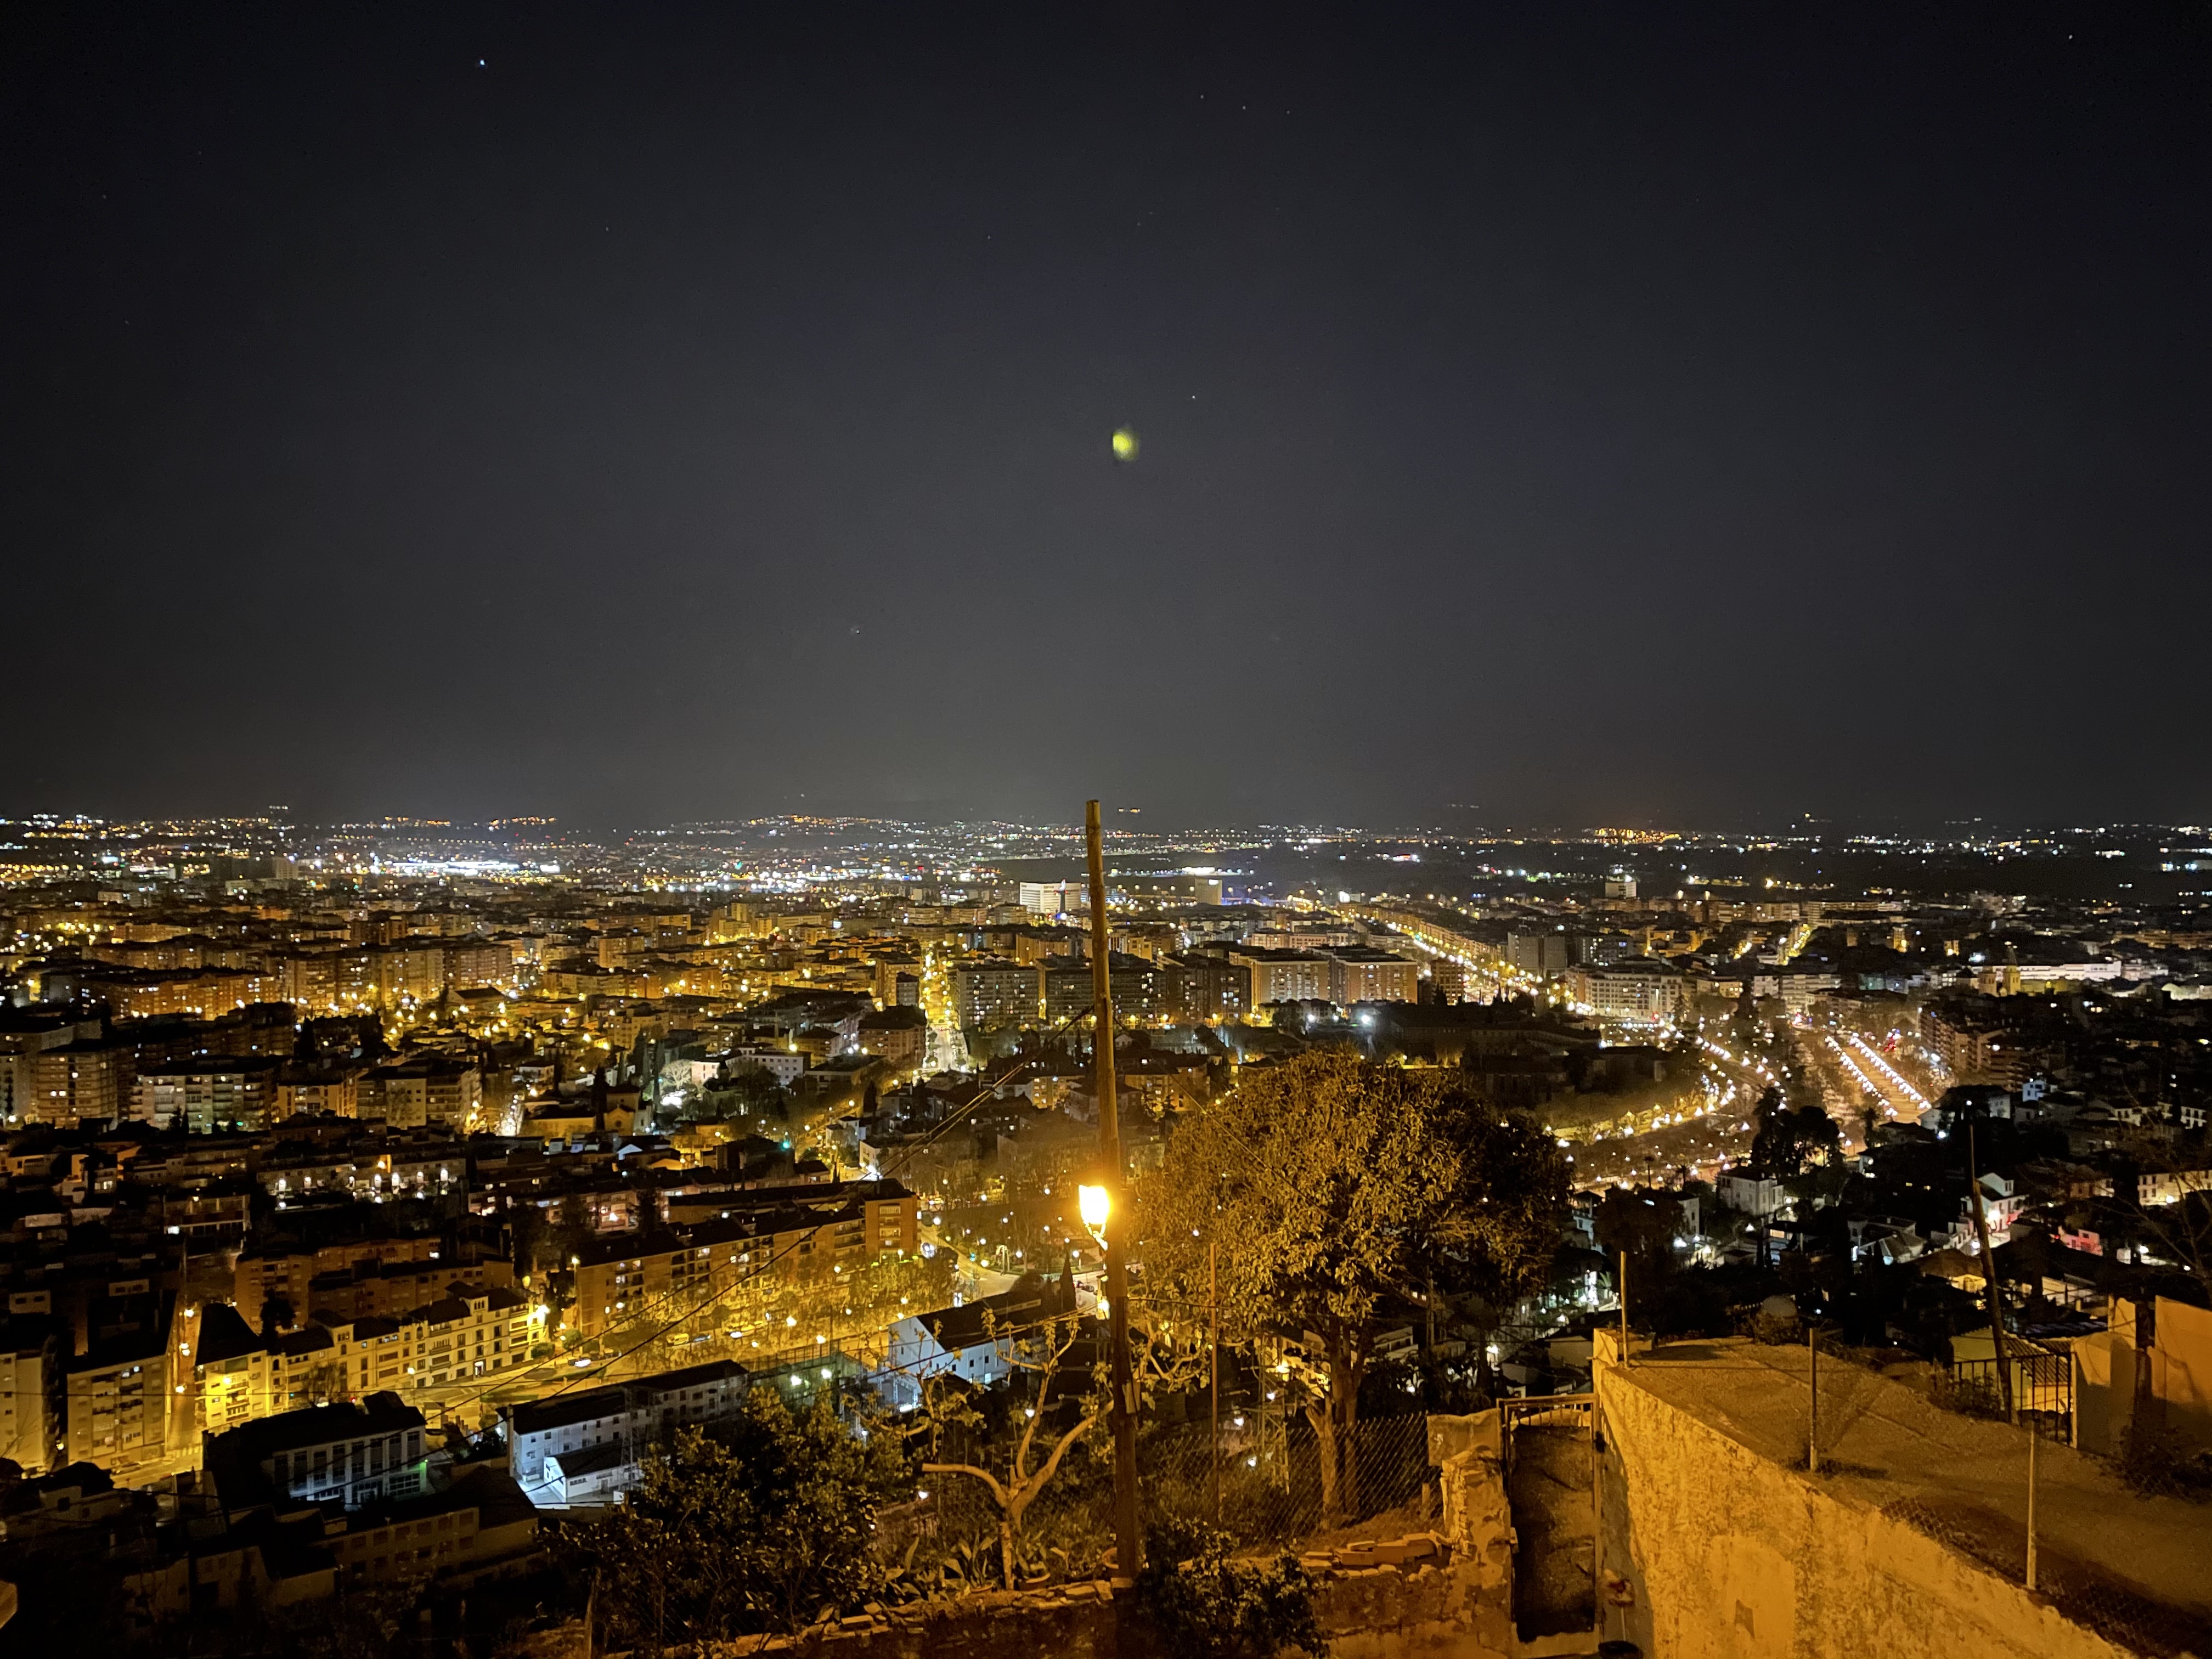 The city of Granada at night